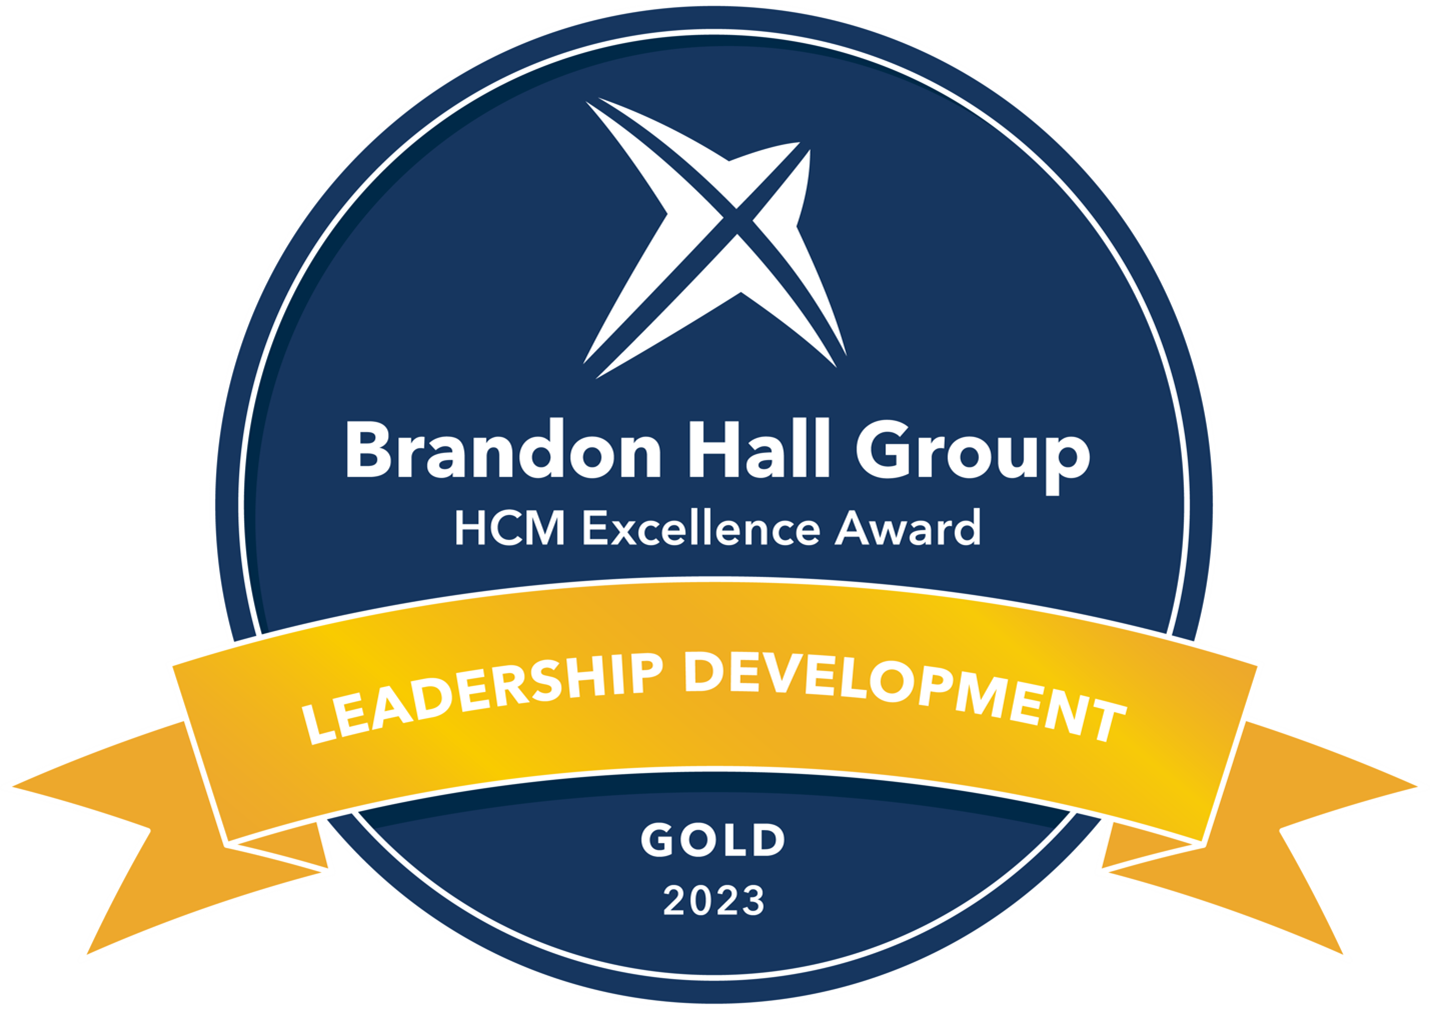 Emblem of the Brandon Hall Group Gold award for Leadership